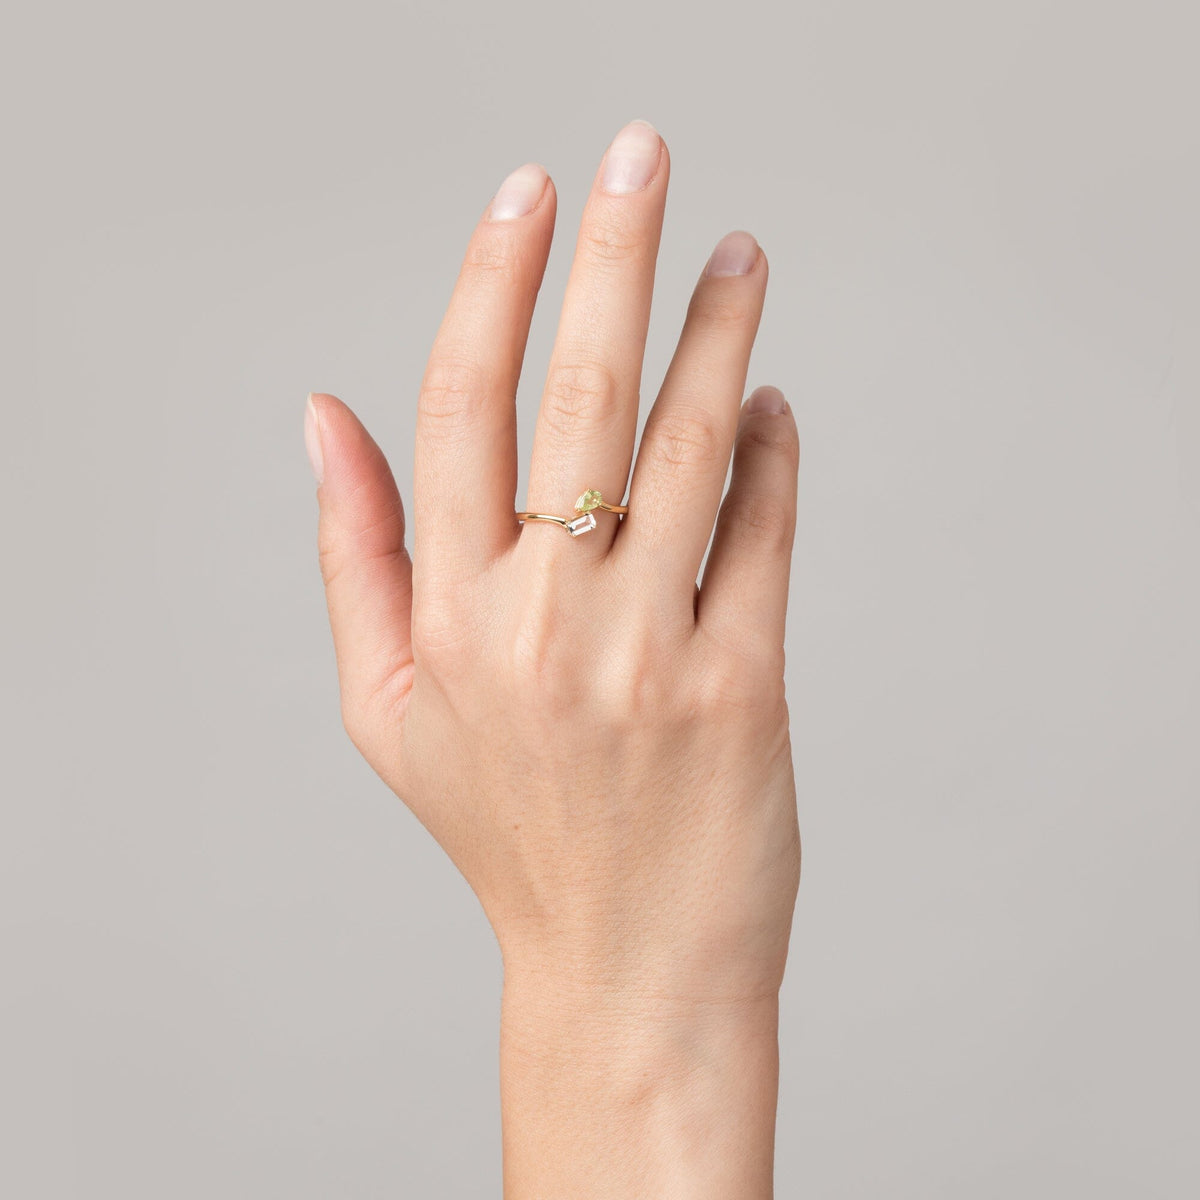 The best Toi Et Moi engagement rings for 2023